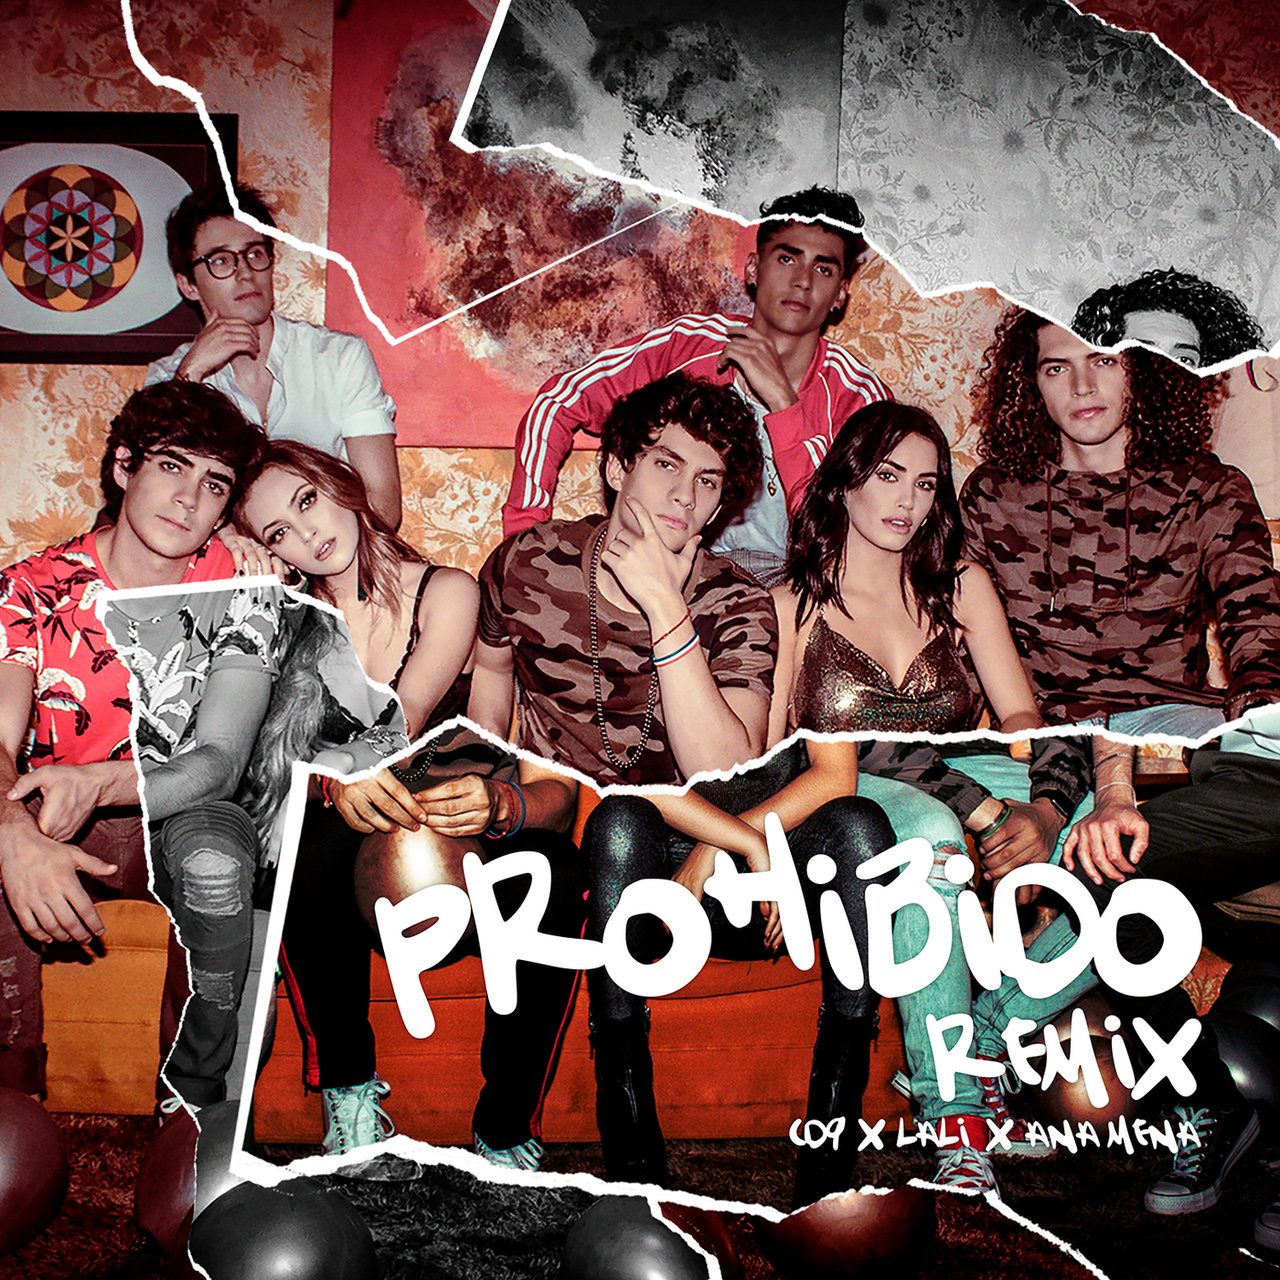 CD9, Lali, & Ana Mena — Prohibido (Remix) cover artwork